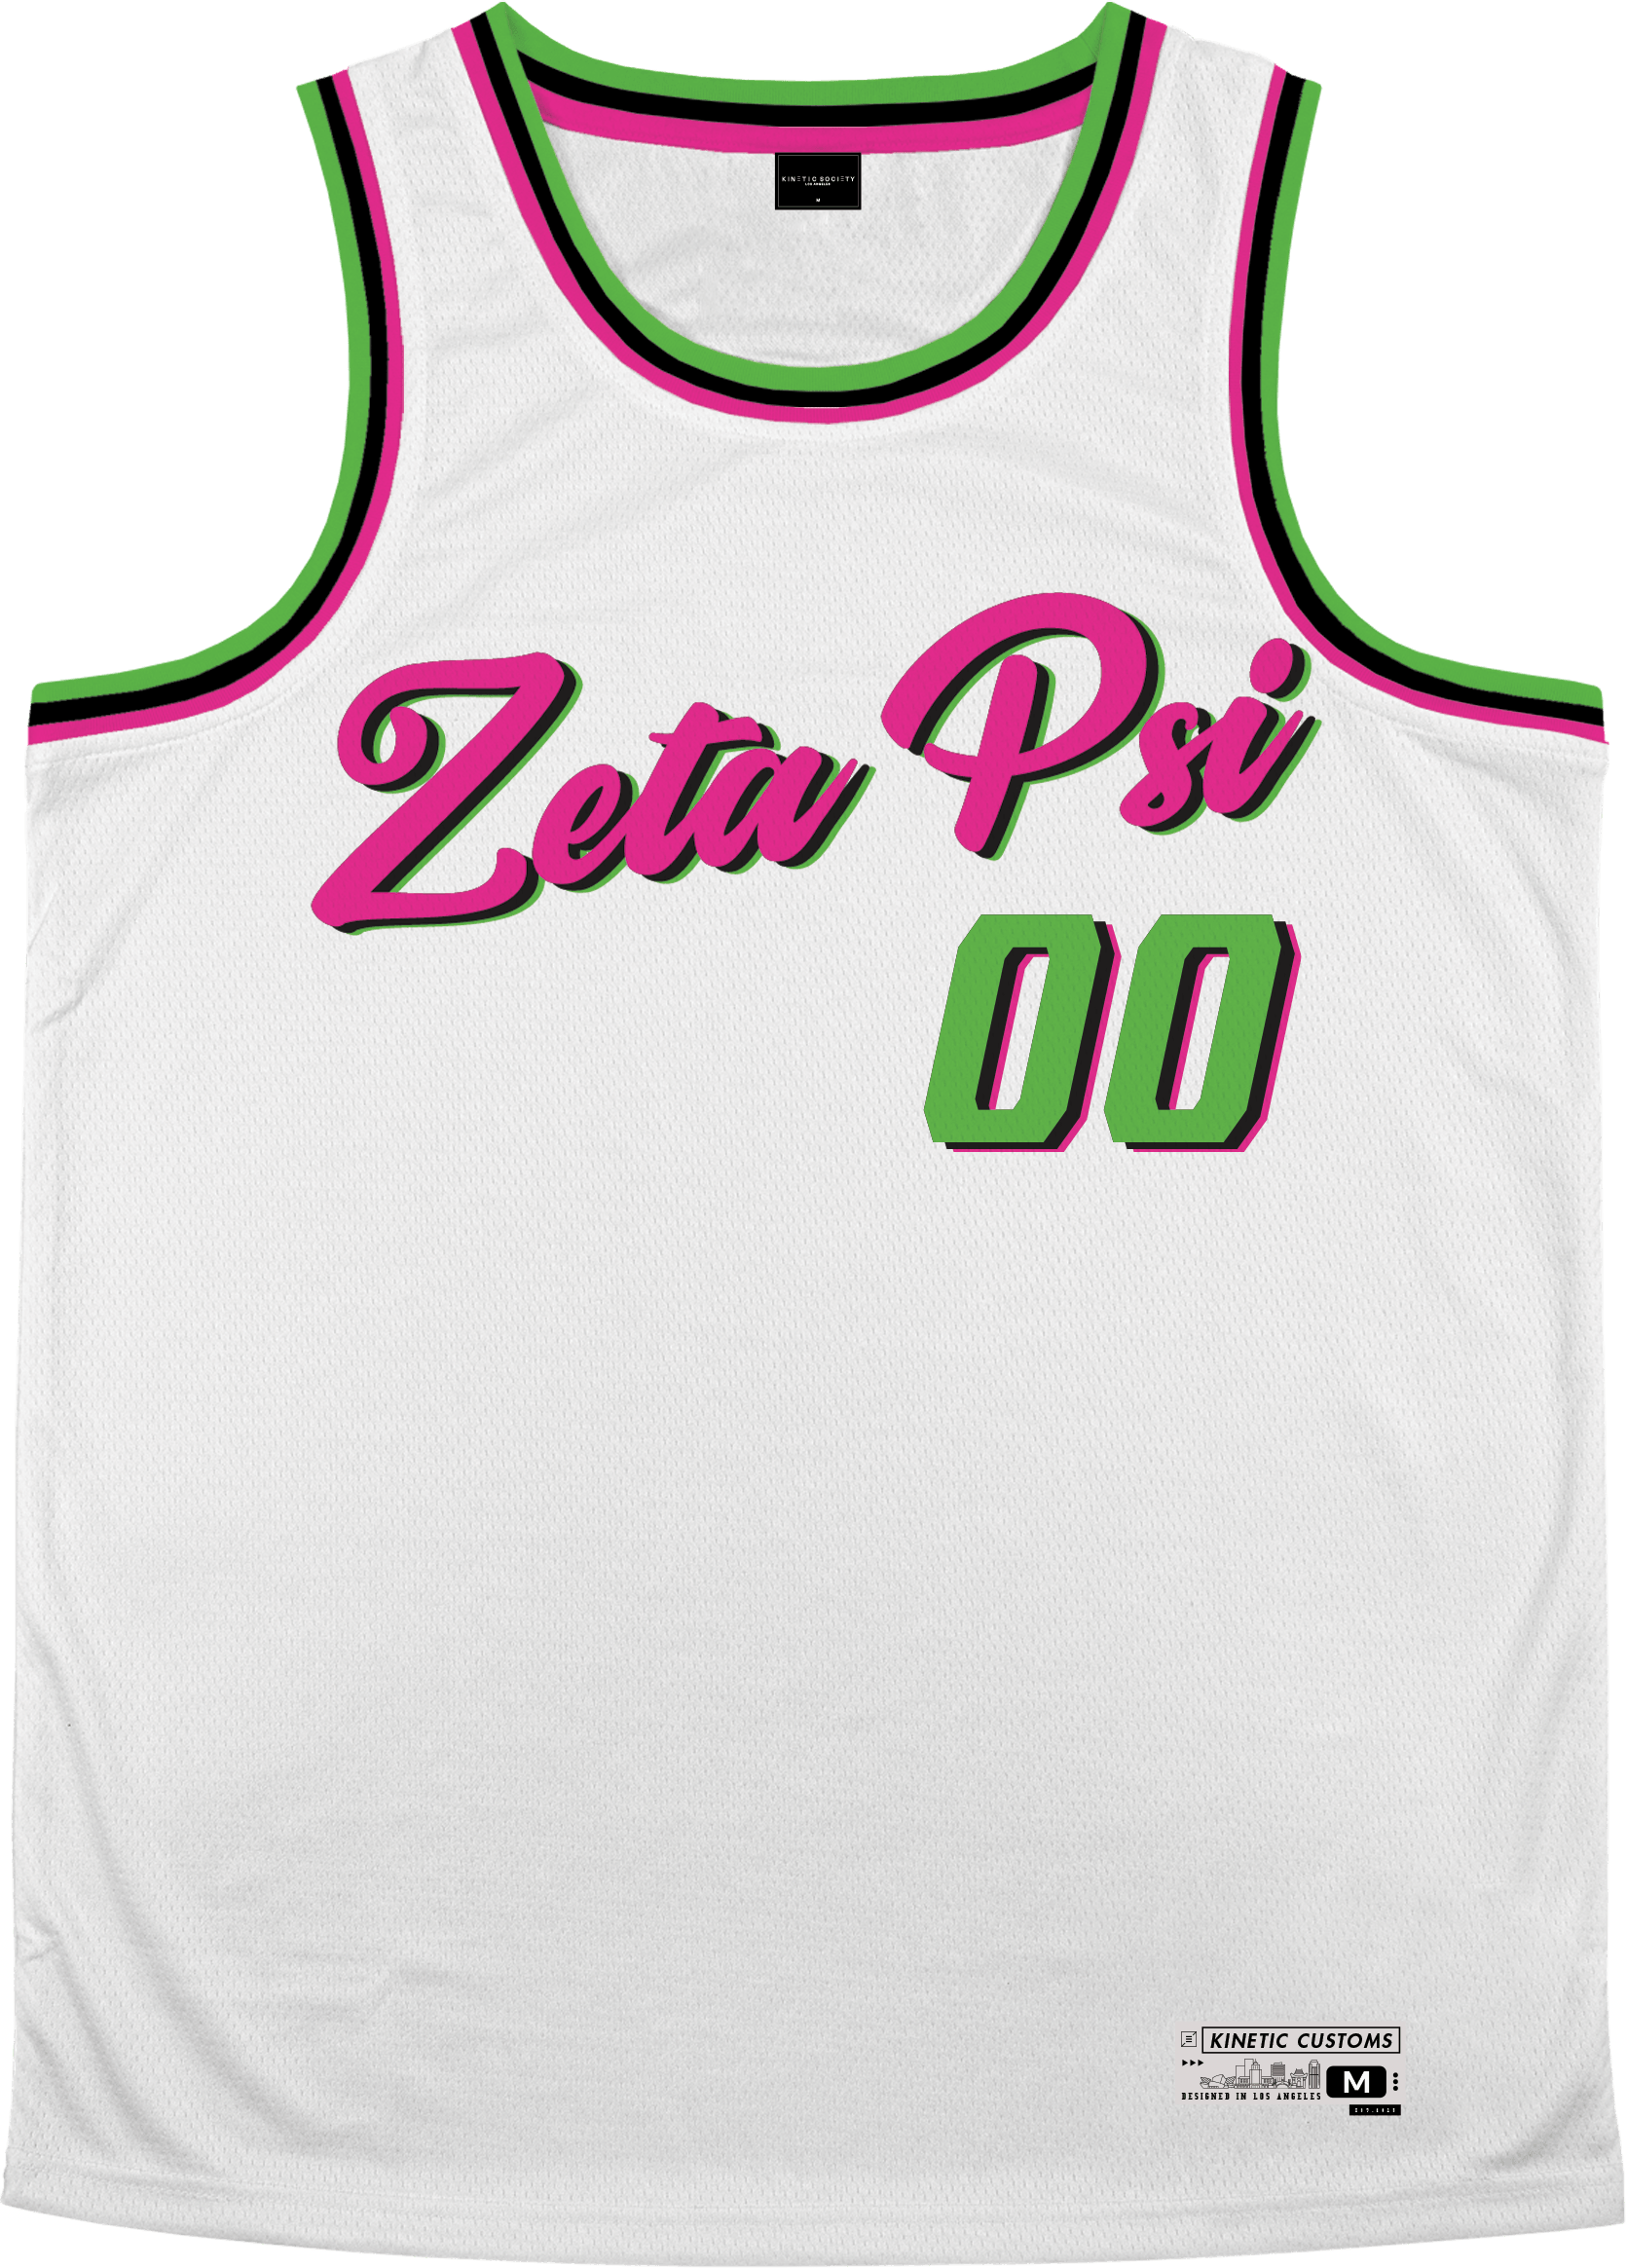 Zeta Psi - Bubble Gum Basketball Jersey - Kinetic Society